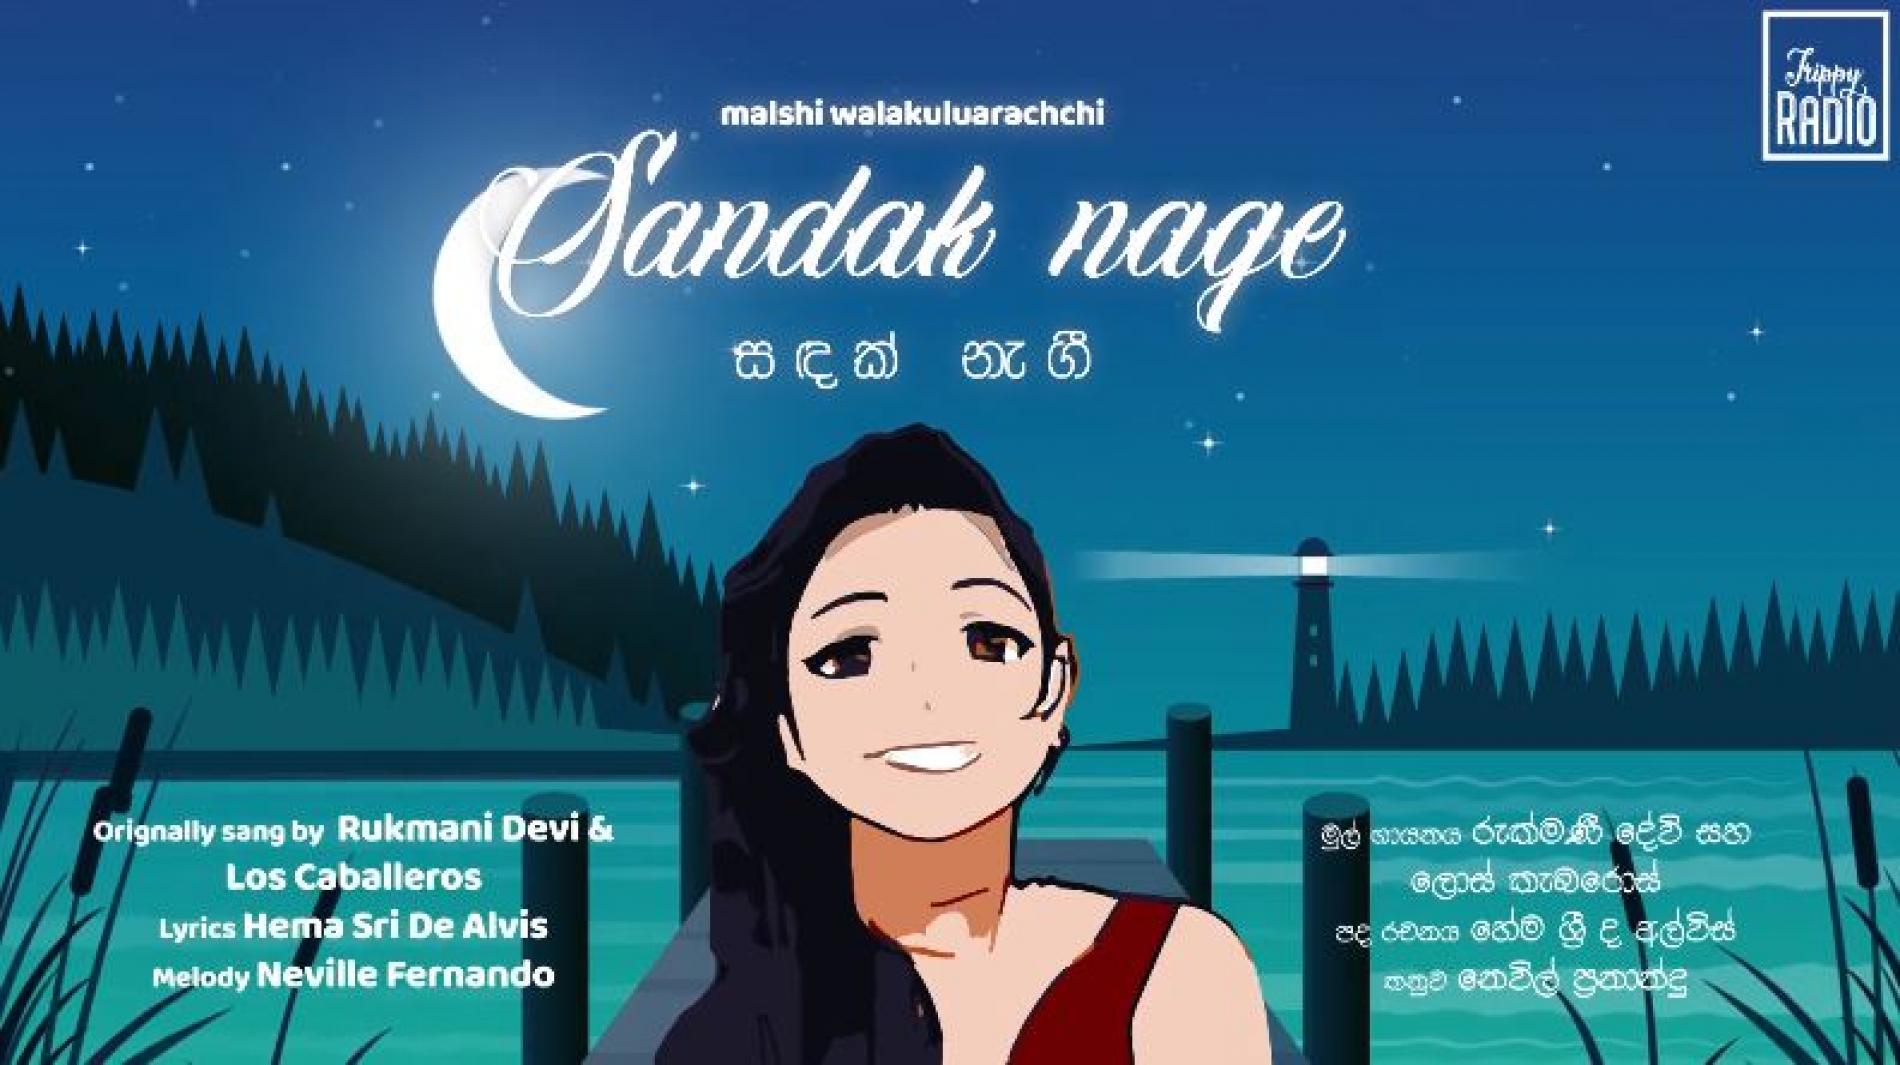 New Music : සඳක් නැගී – Sandak Nage (Rukmani Devi & Los Caballeros) Malshi Walakuluarachchi Cover – Trippy Radio